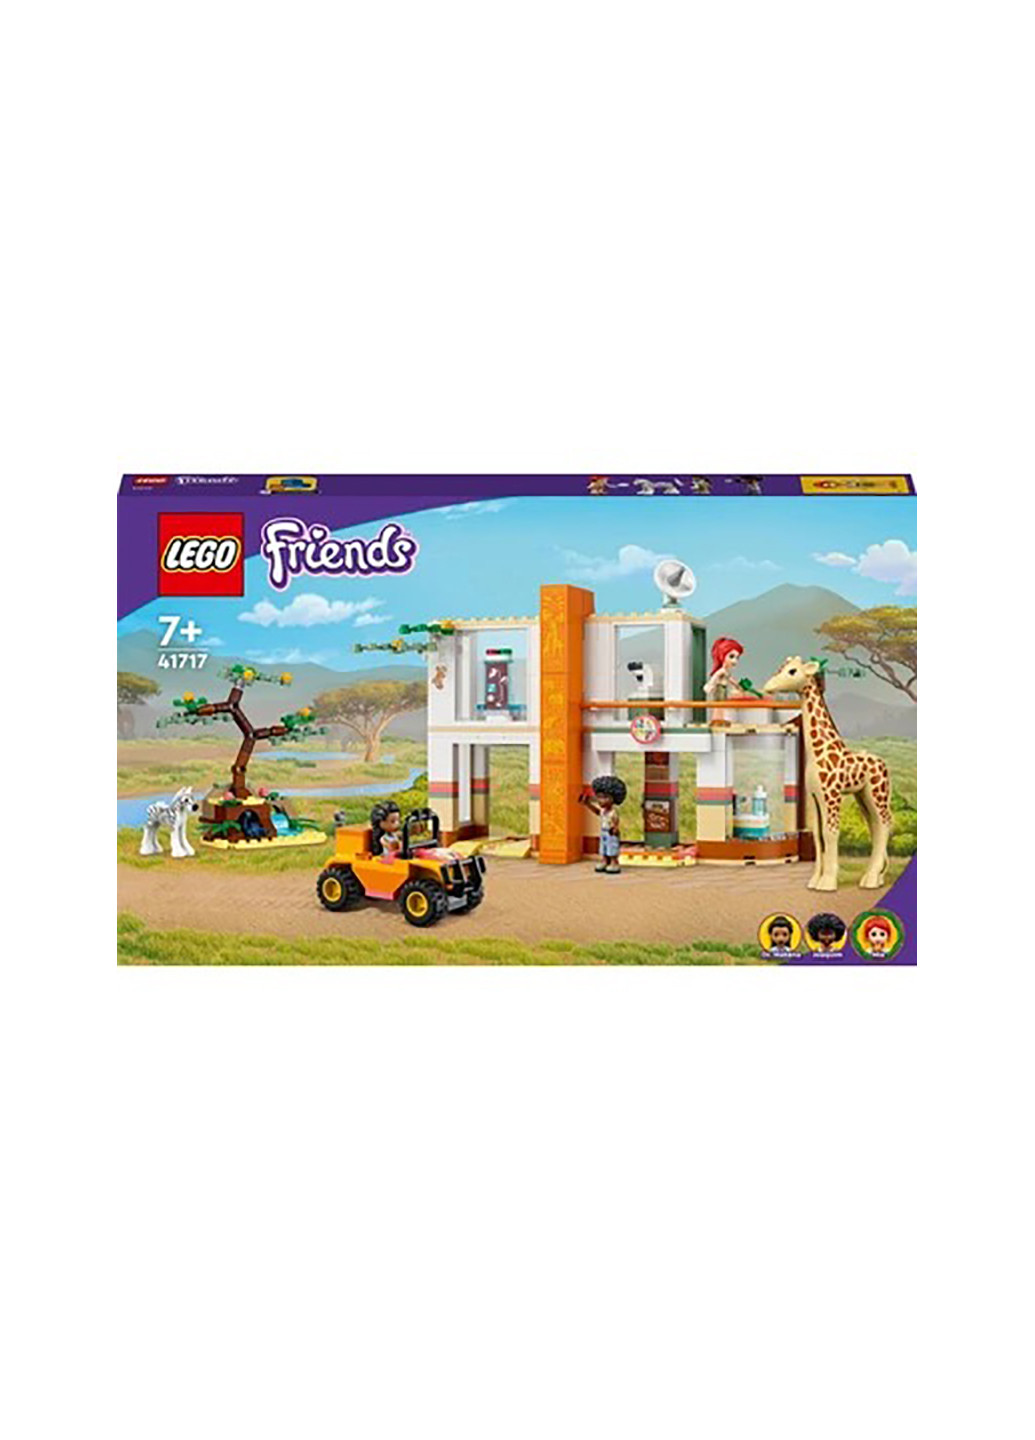 Конструктор Friends Порятунок диких тварин Мії 41717 Lego (257875100)